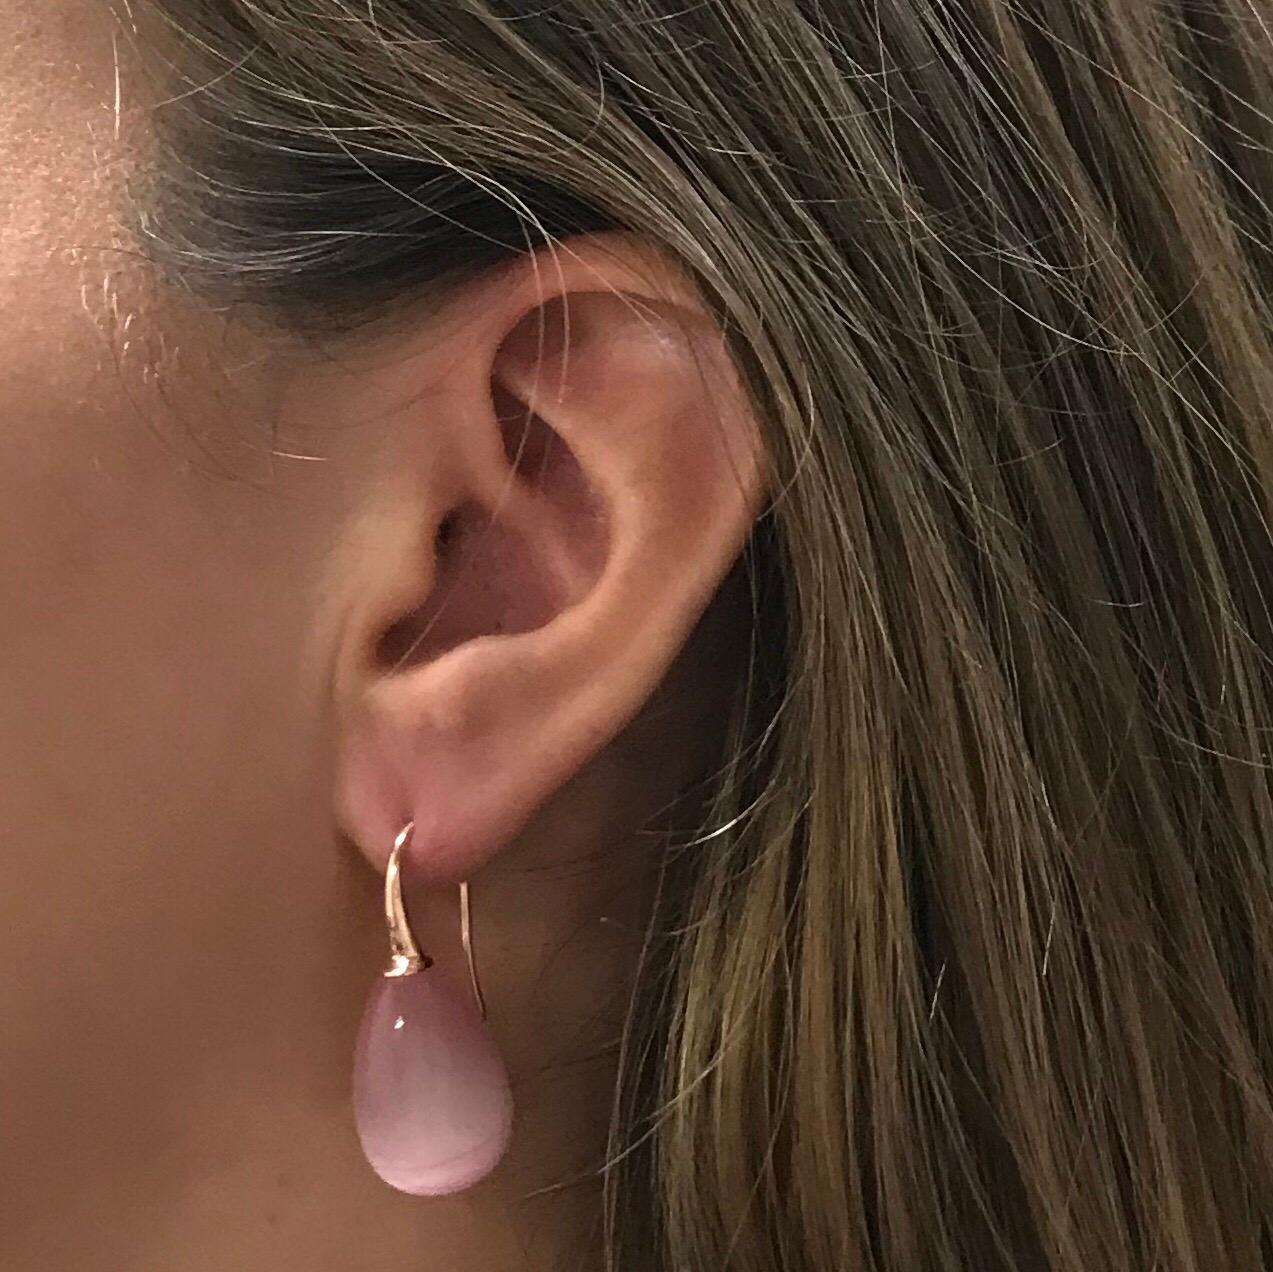 Pink Quartz and Rose Gold 18 Karat Drop Earrings 1